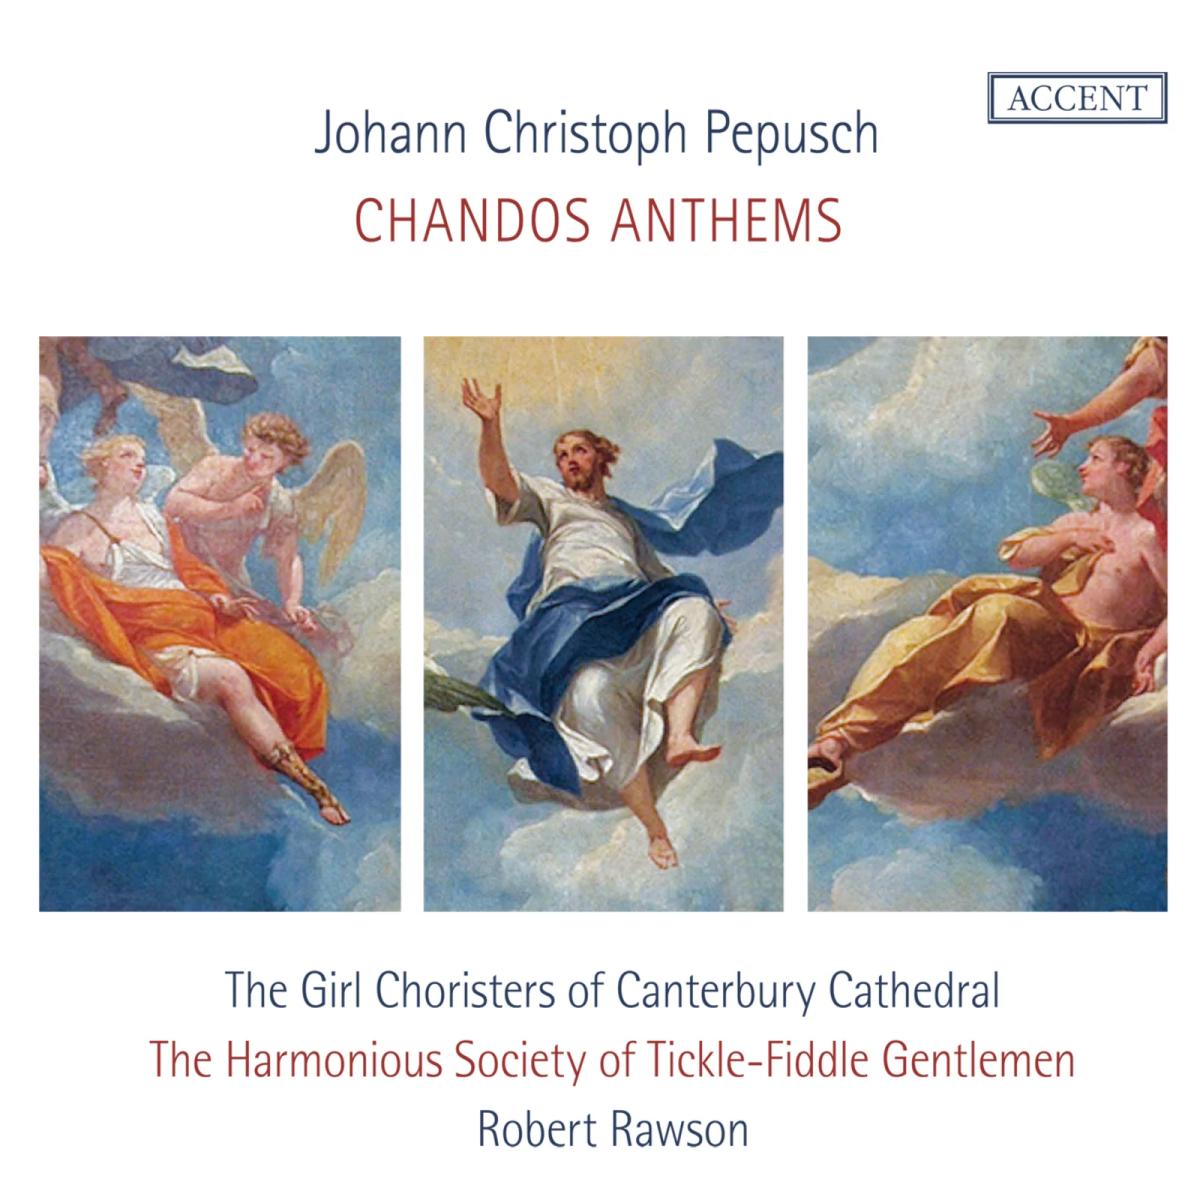 Johann Christoph Pepusch: Chandos Anthems - The Harmonious Society of Tickle-Fiddle Gentlemen